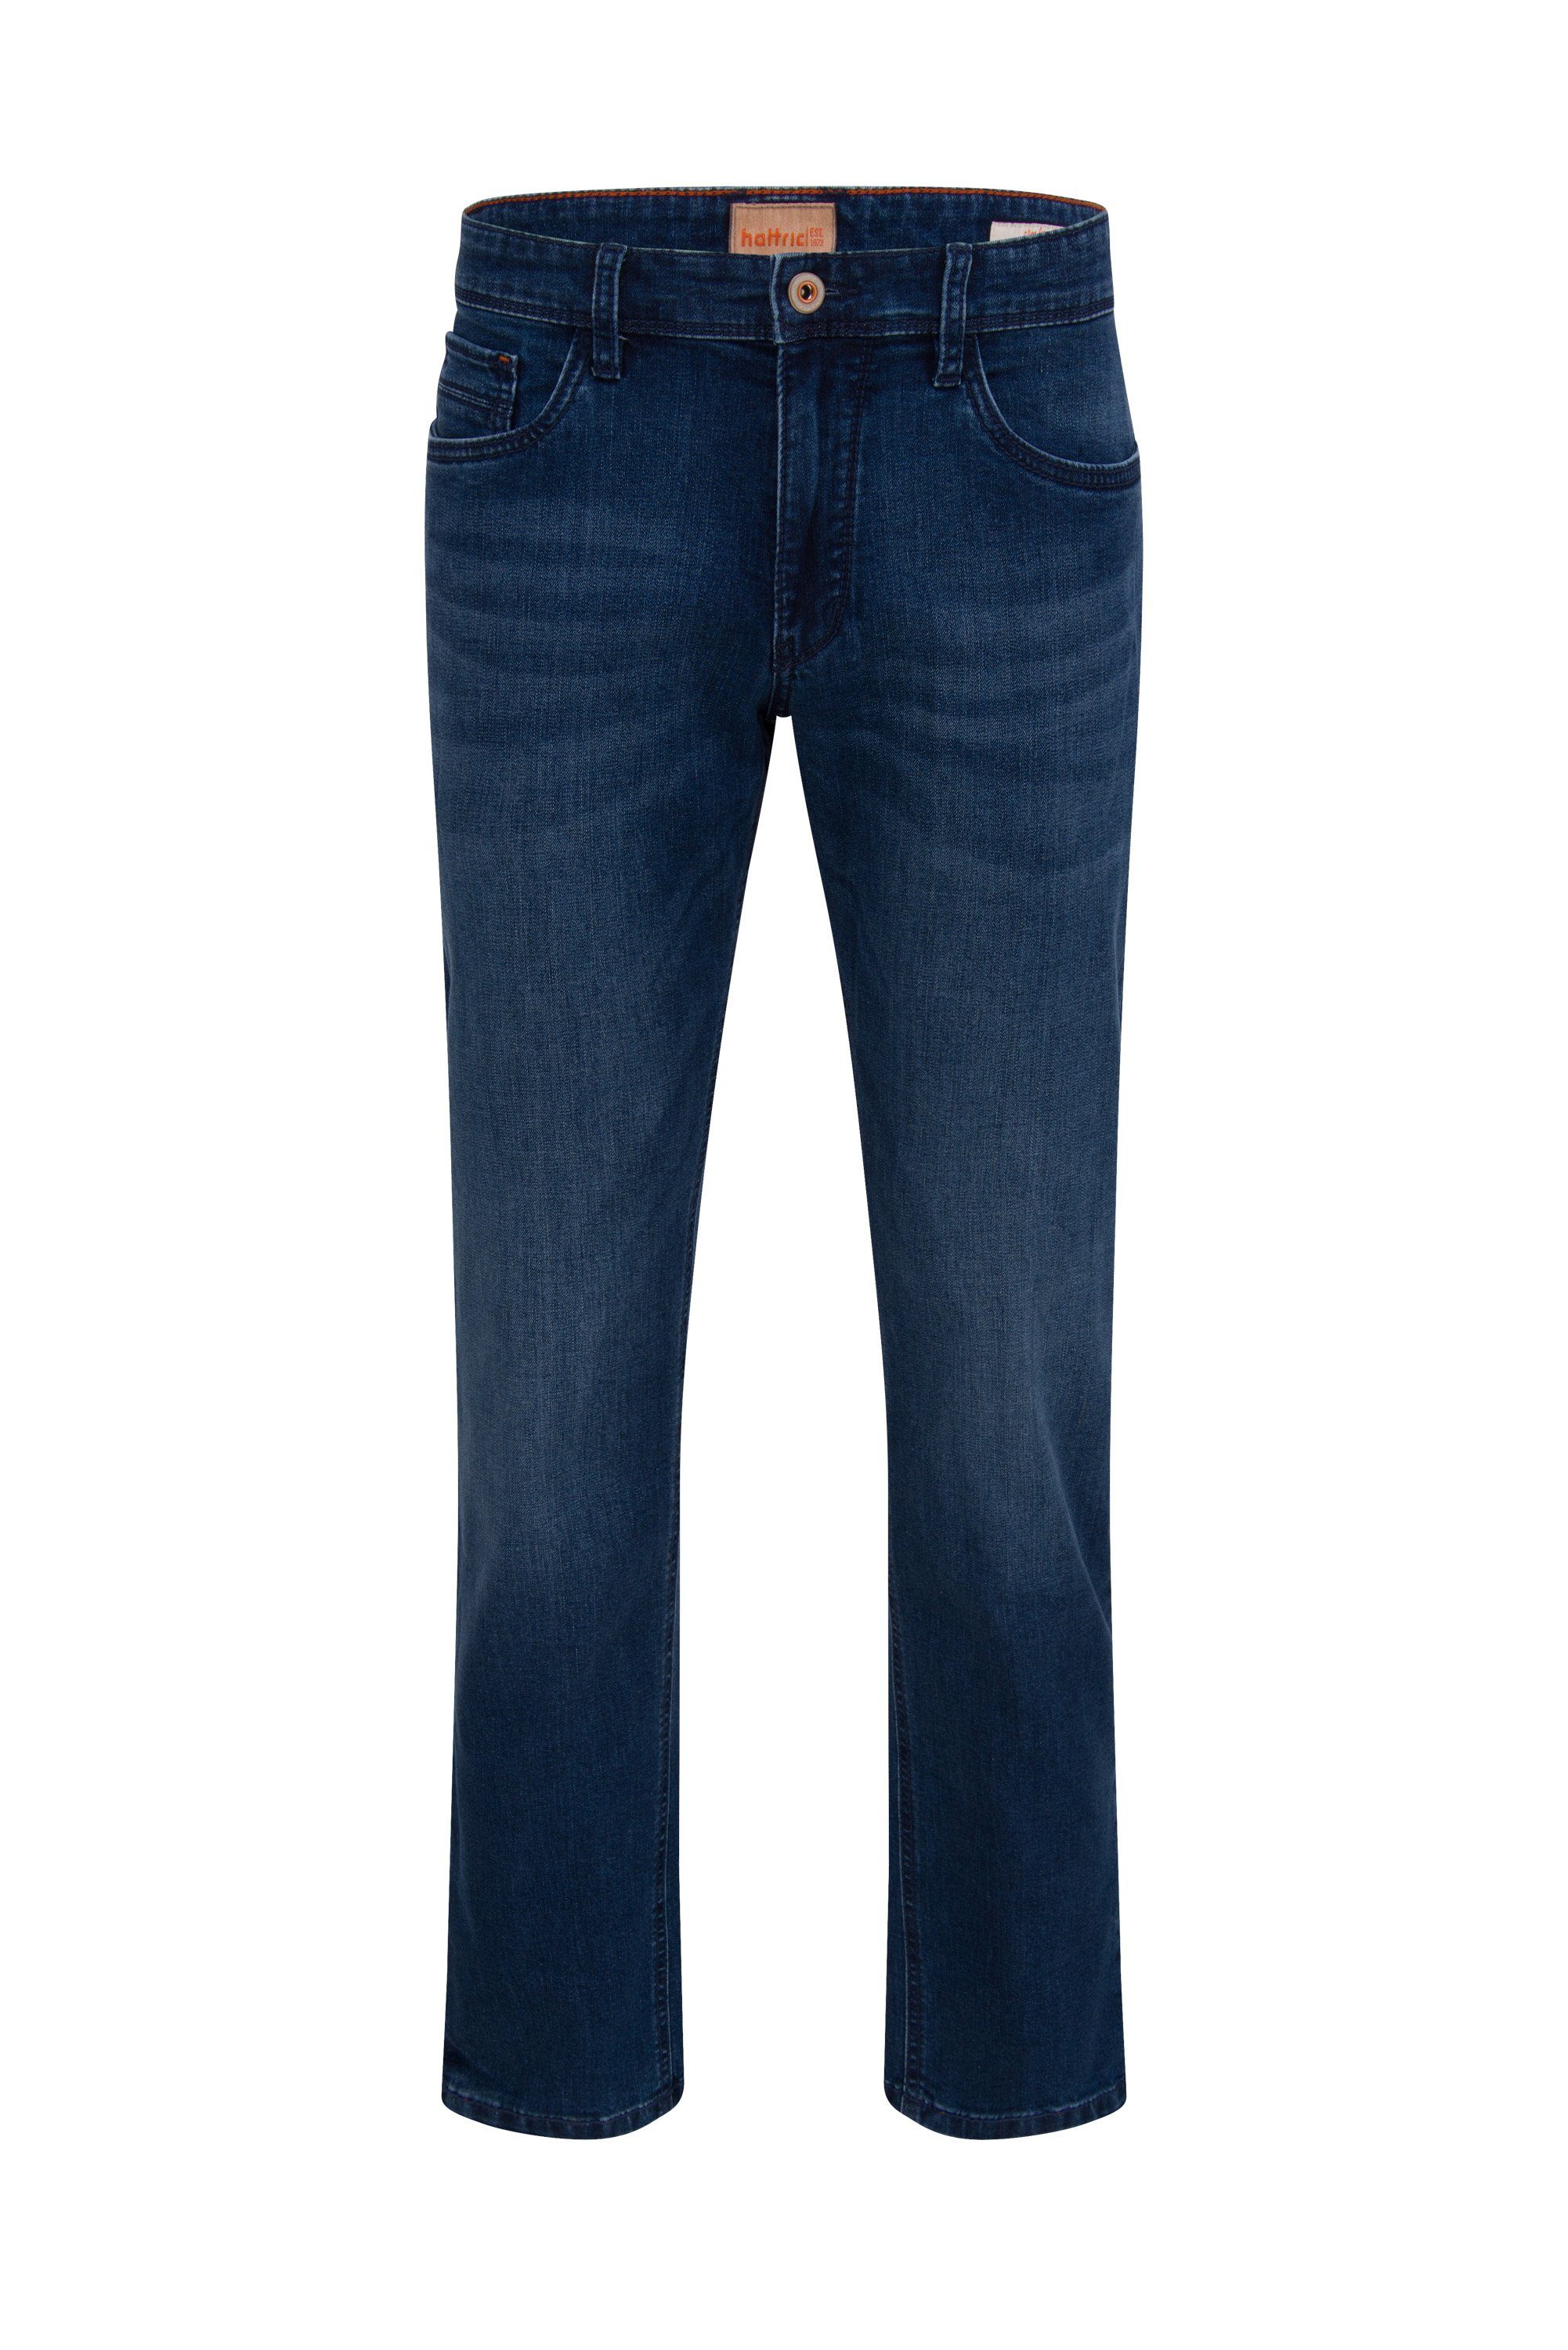 buffies HARRIS HATTRIC 5-Pocket-Jeans blue mid Hattric 6348.42 688745 used